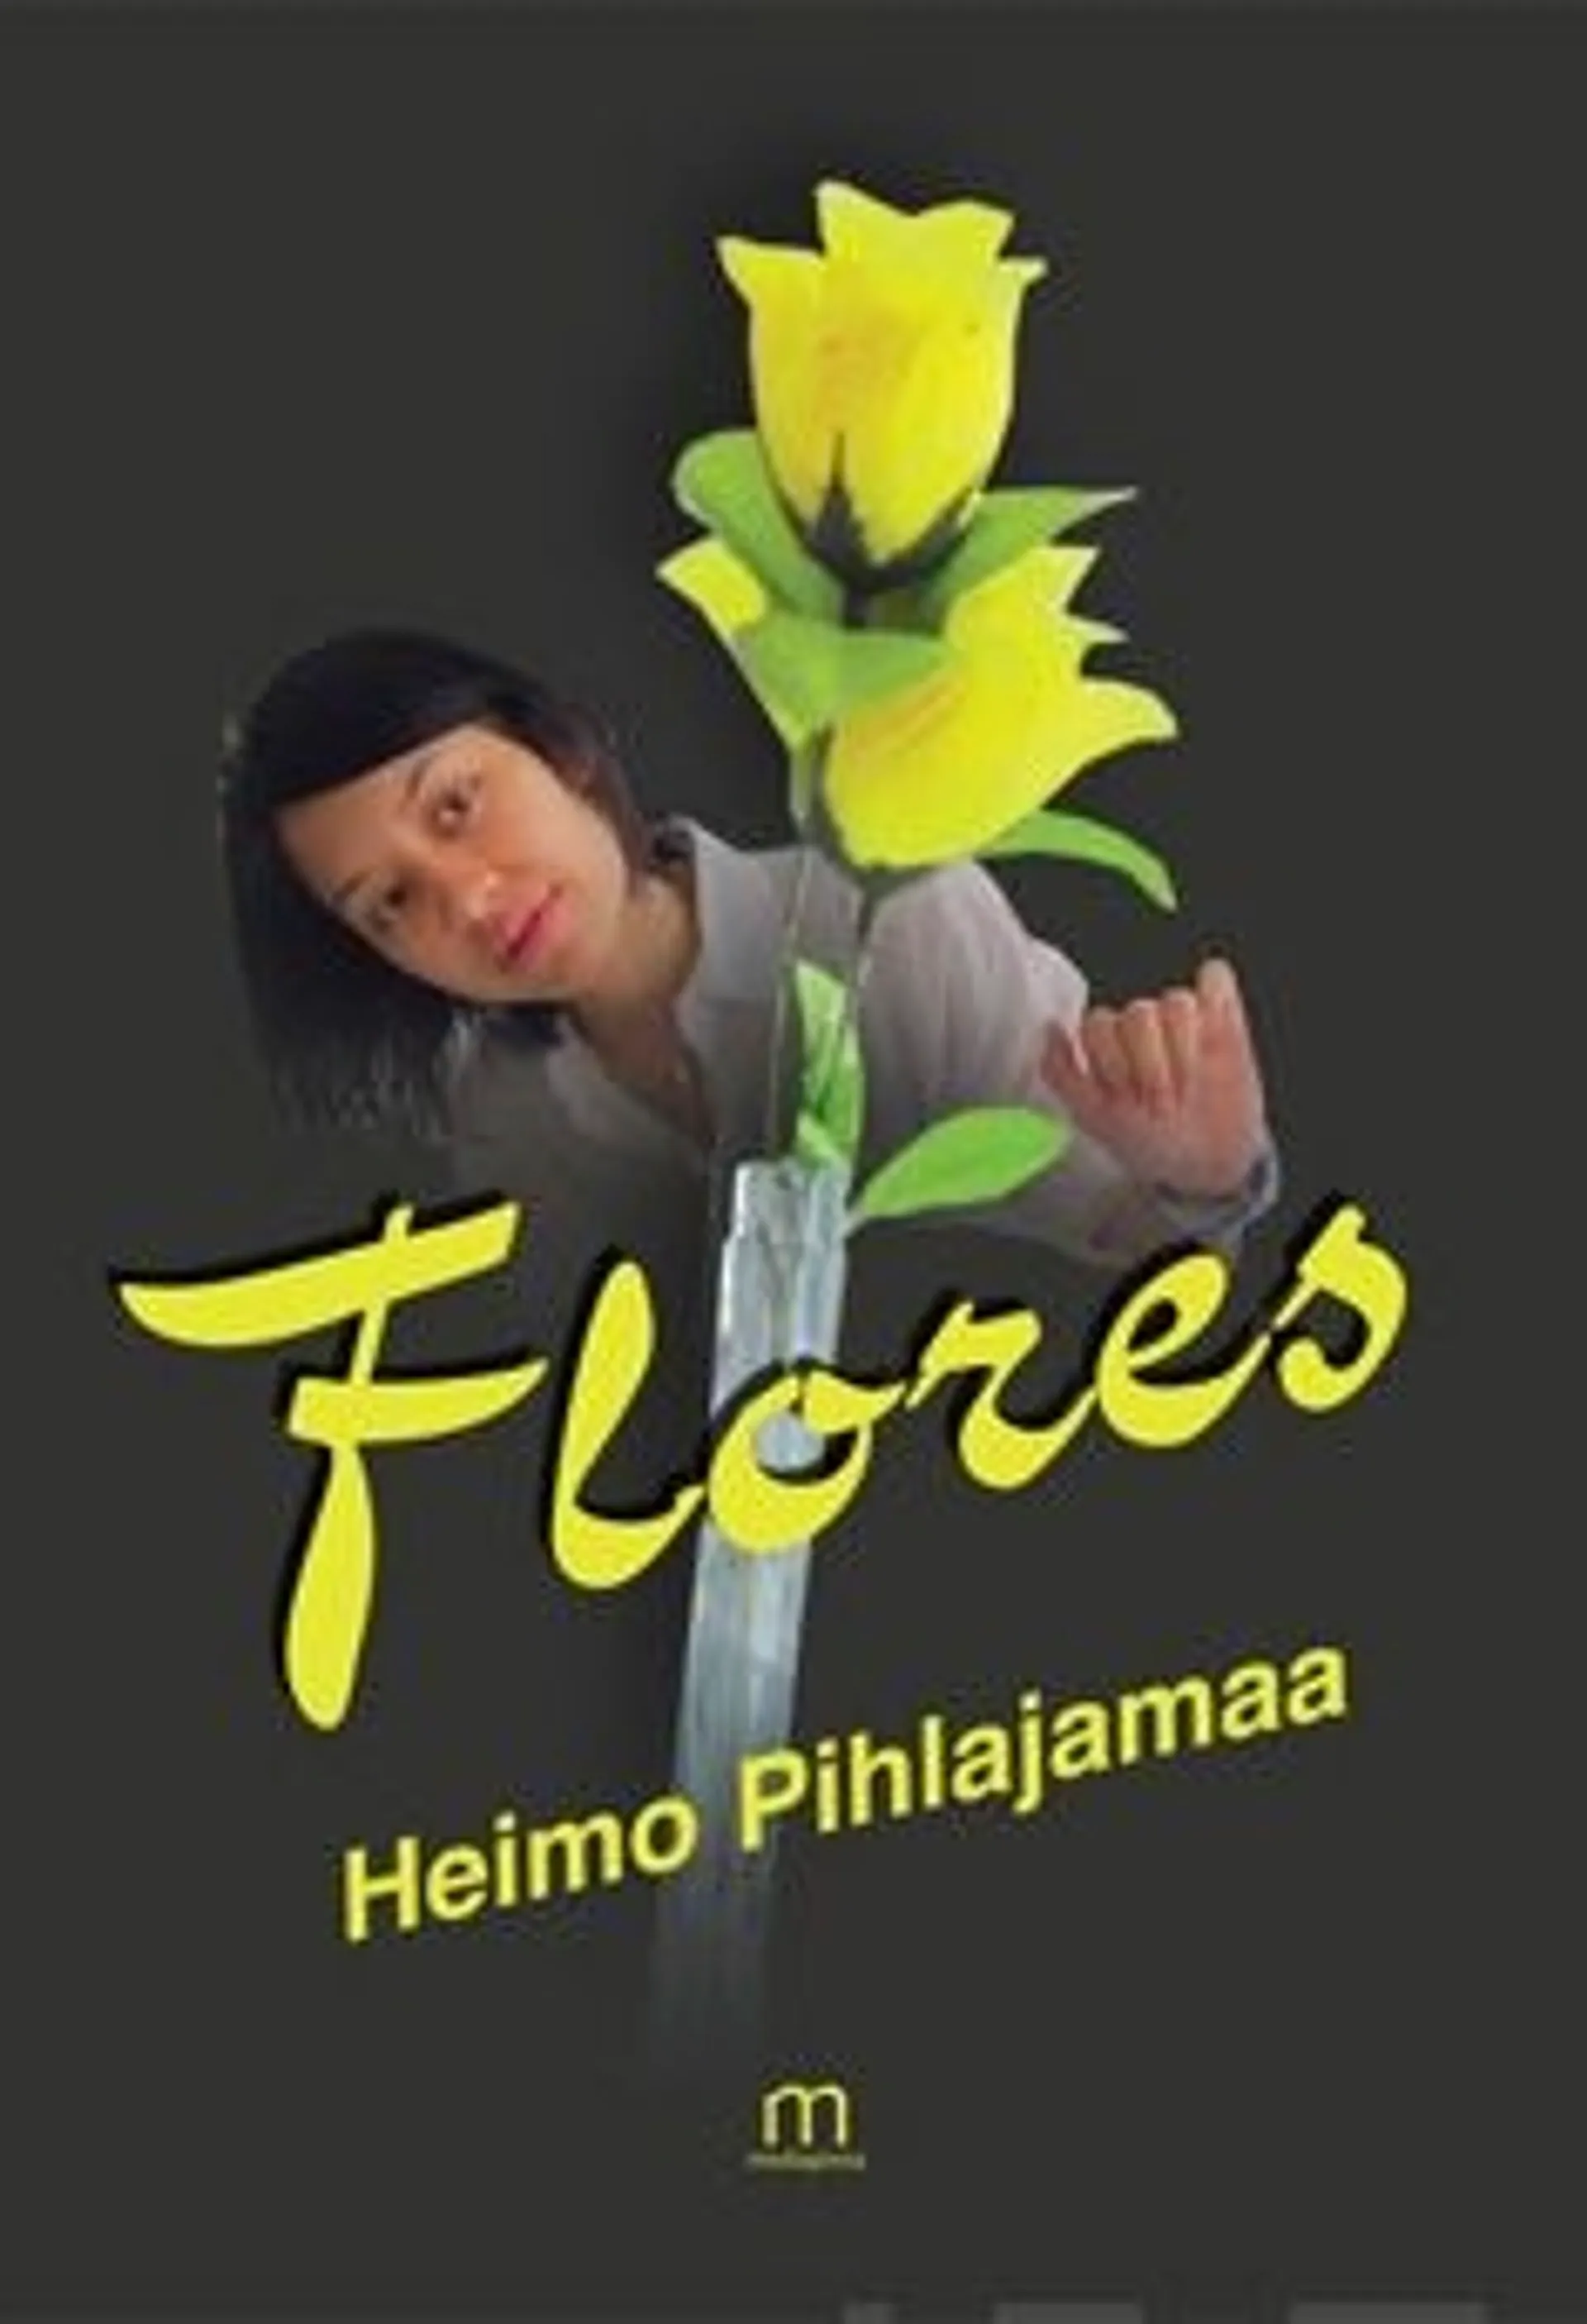 Pihlajamaa, Flores